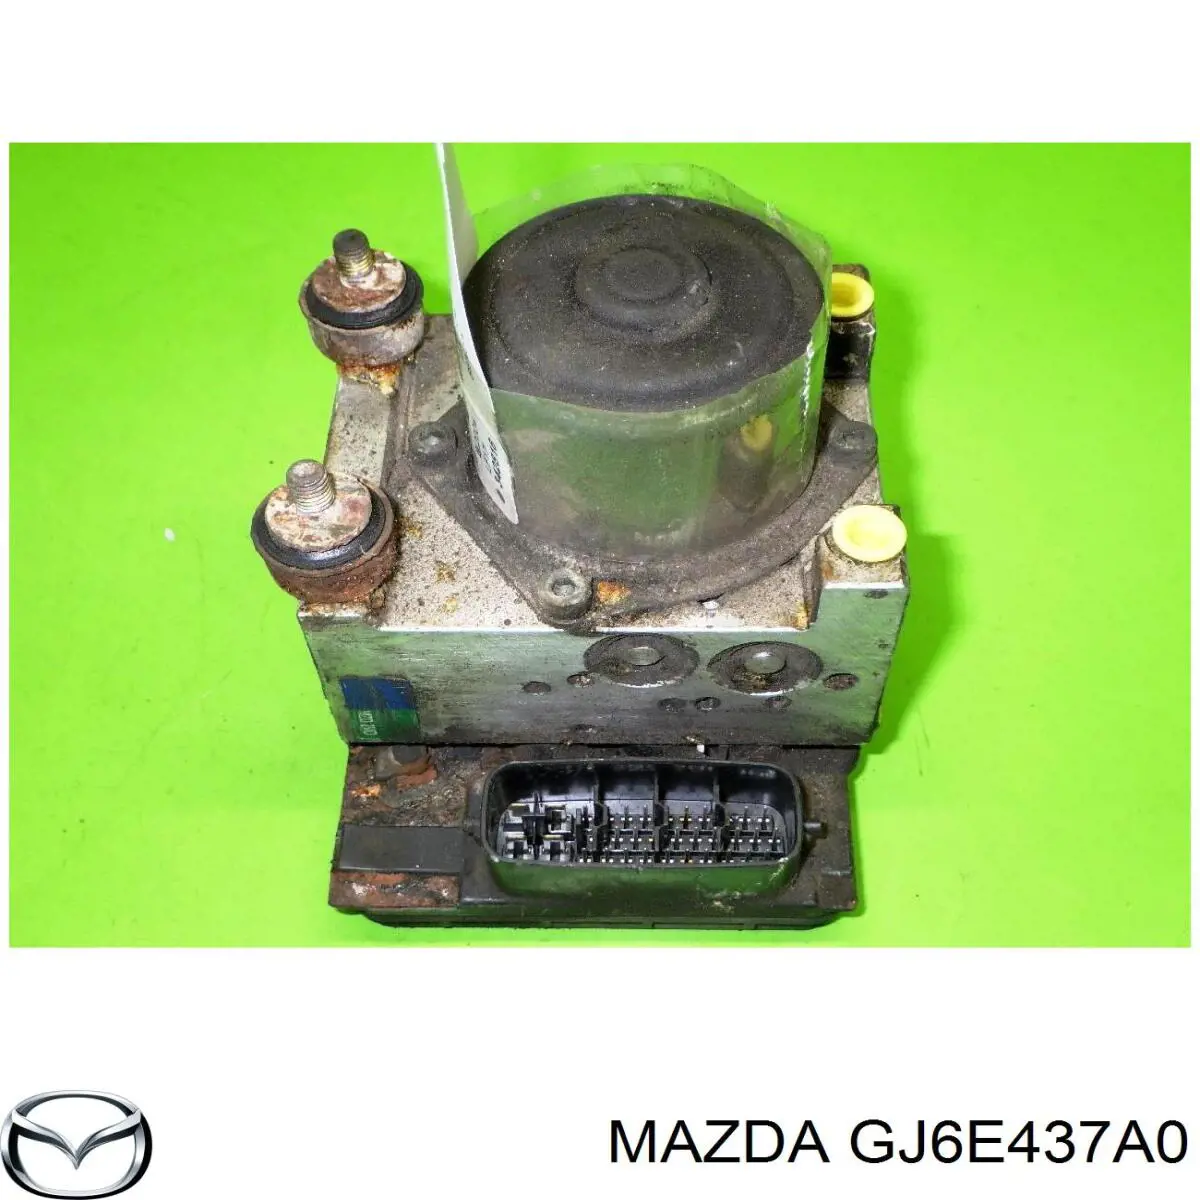 GJ6E437A0 Mazda блок управления абс (abs гидравлический)